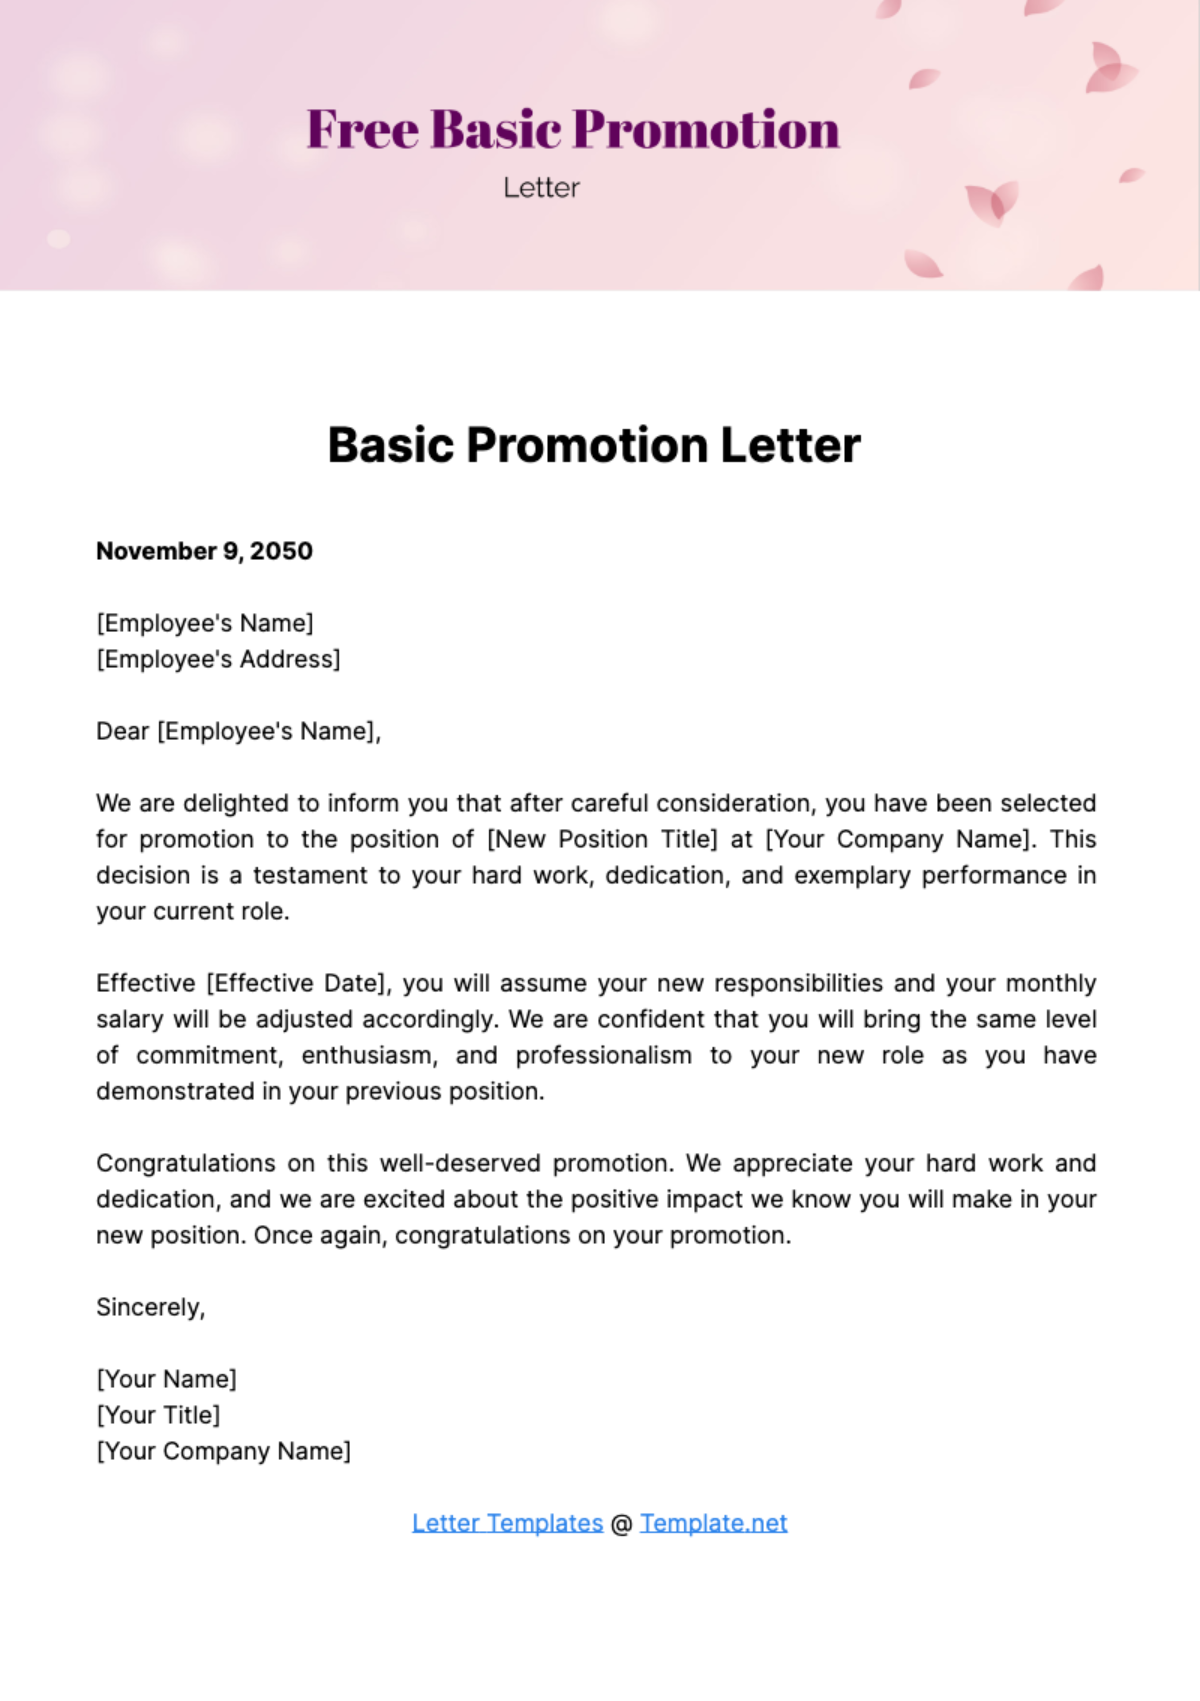 Basic Promotion Letter Template